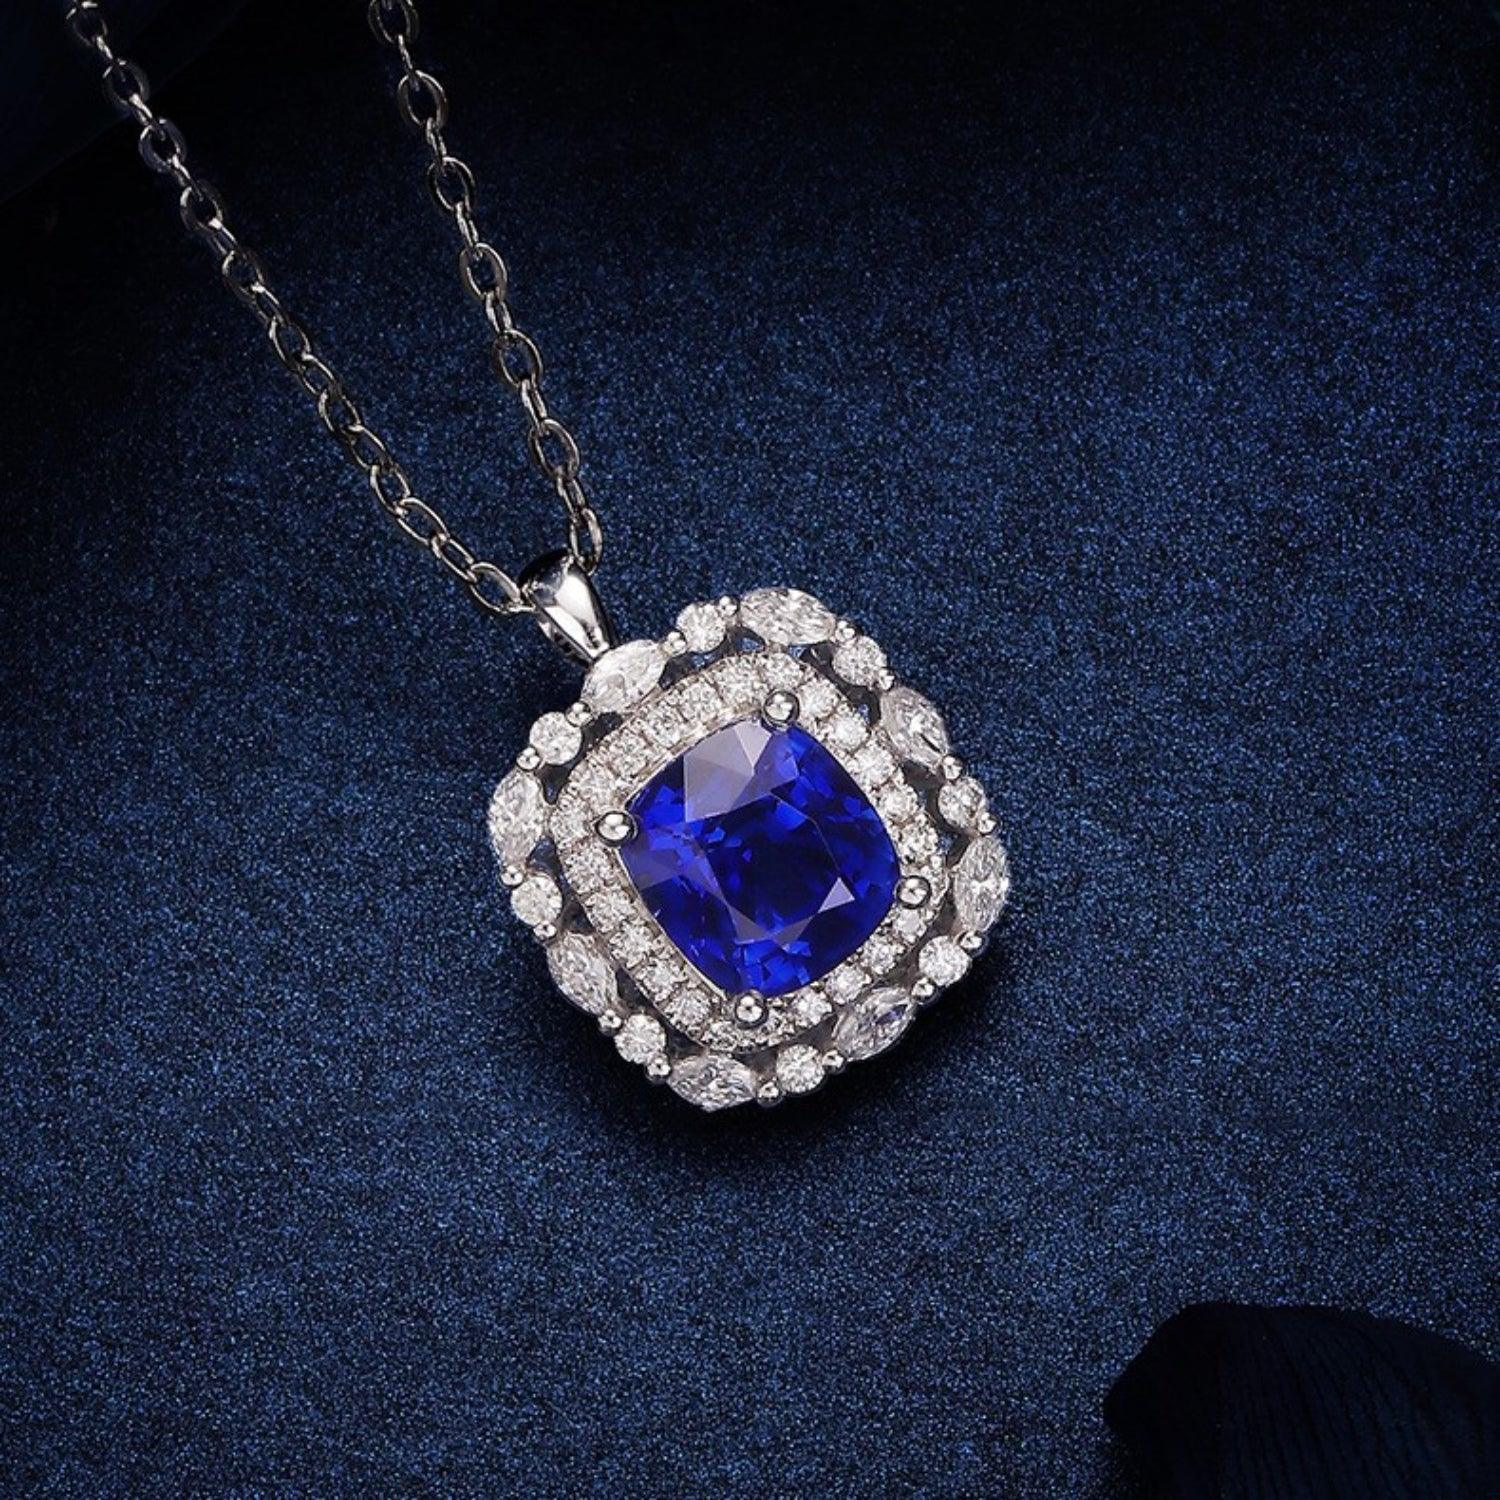 Silver-Plated Artificial Gemstone Pendant Necklace - Bona Fide Fashion